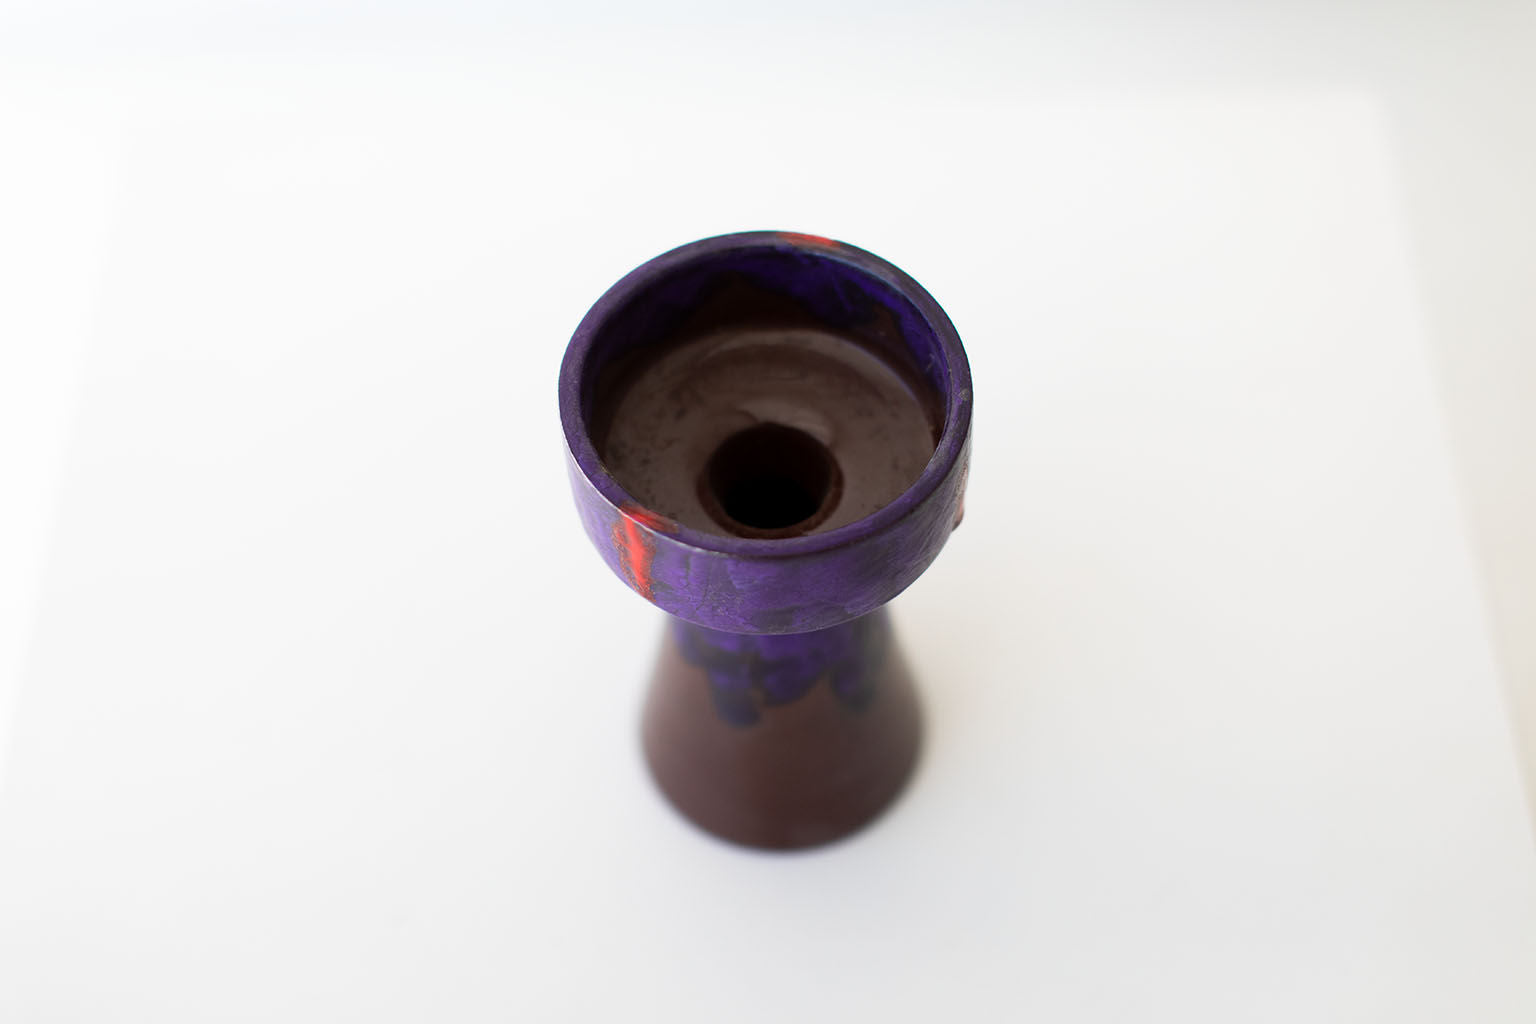 Bitossi Purple Candle Holder or Vase for Rosenthal Netter